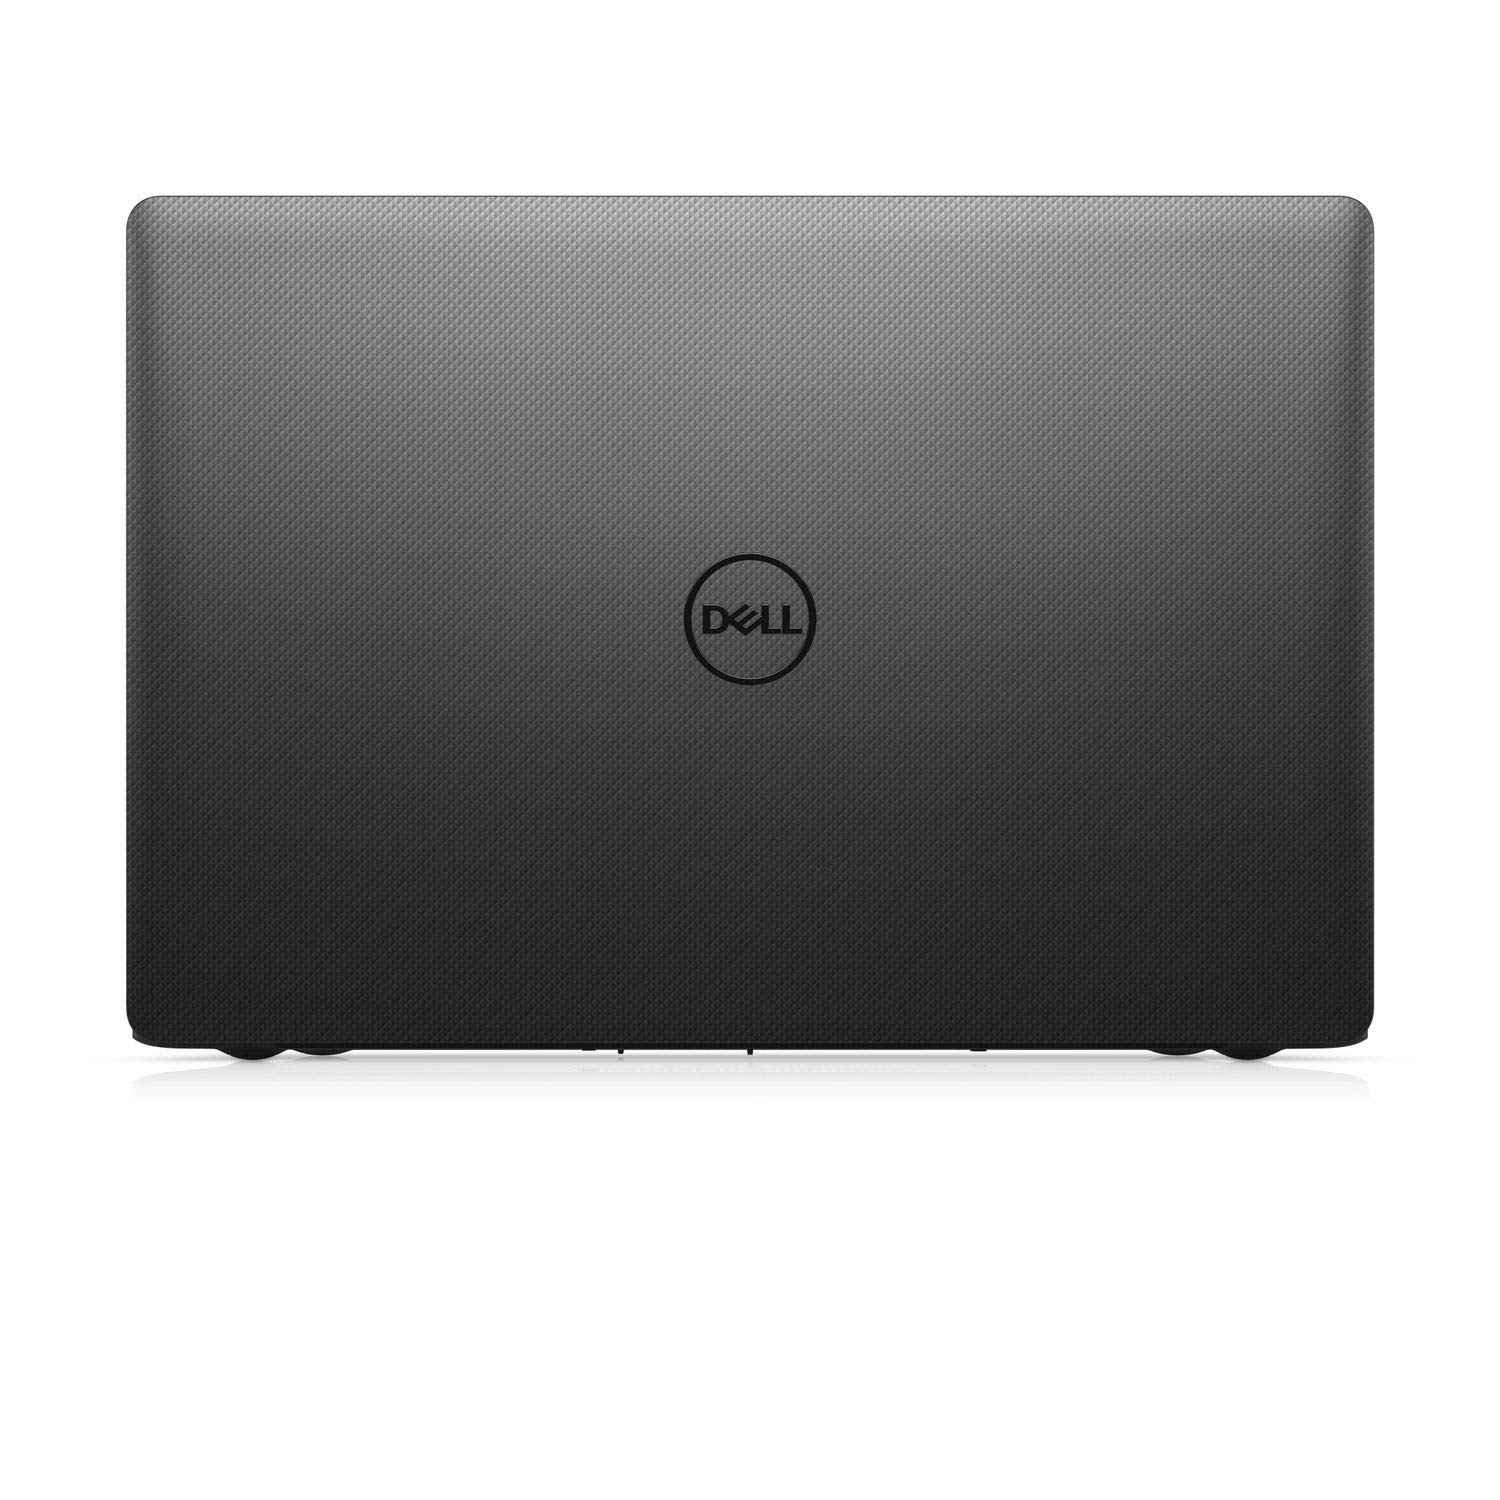 2020 Newest Dell Inspiron 15 3000 Series Laptop, 15.6" Full HD Non-Touchscreen, 10th Gen Intel Core i5-1035G1 Processor, 8GB RAM, 256GB PCIe SSD, Webcam, HDMI, Wi-Fi, Bluetooth, Windows 10 Home, Black